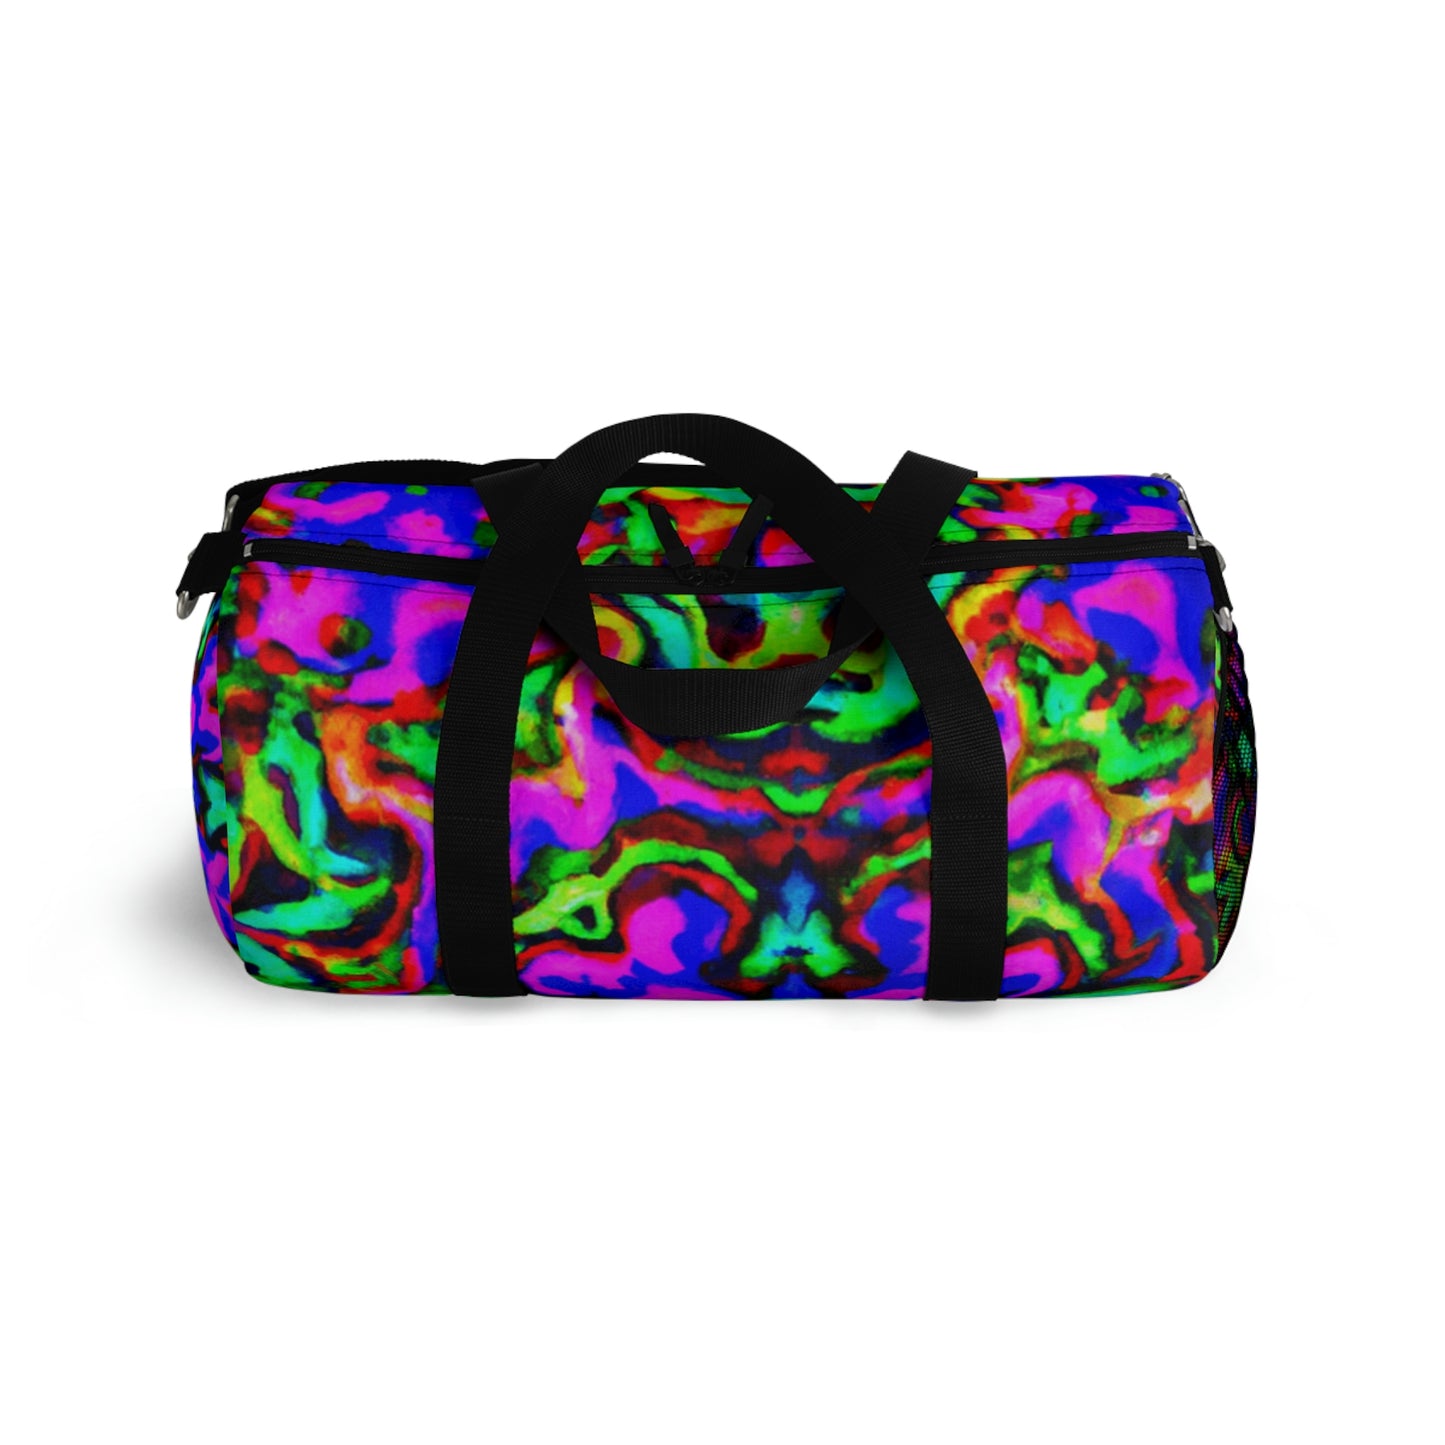 Glittero - Psychedelic Duffel Bag